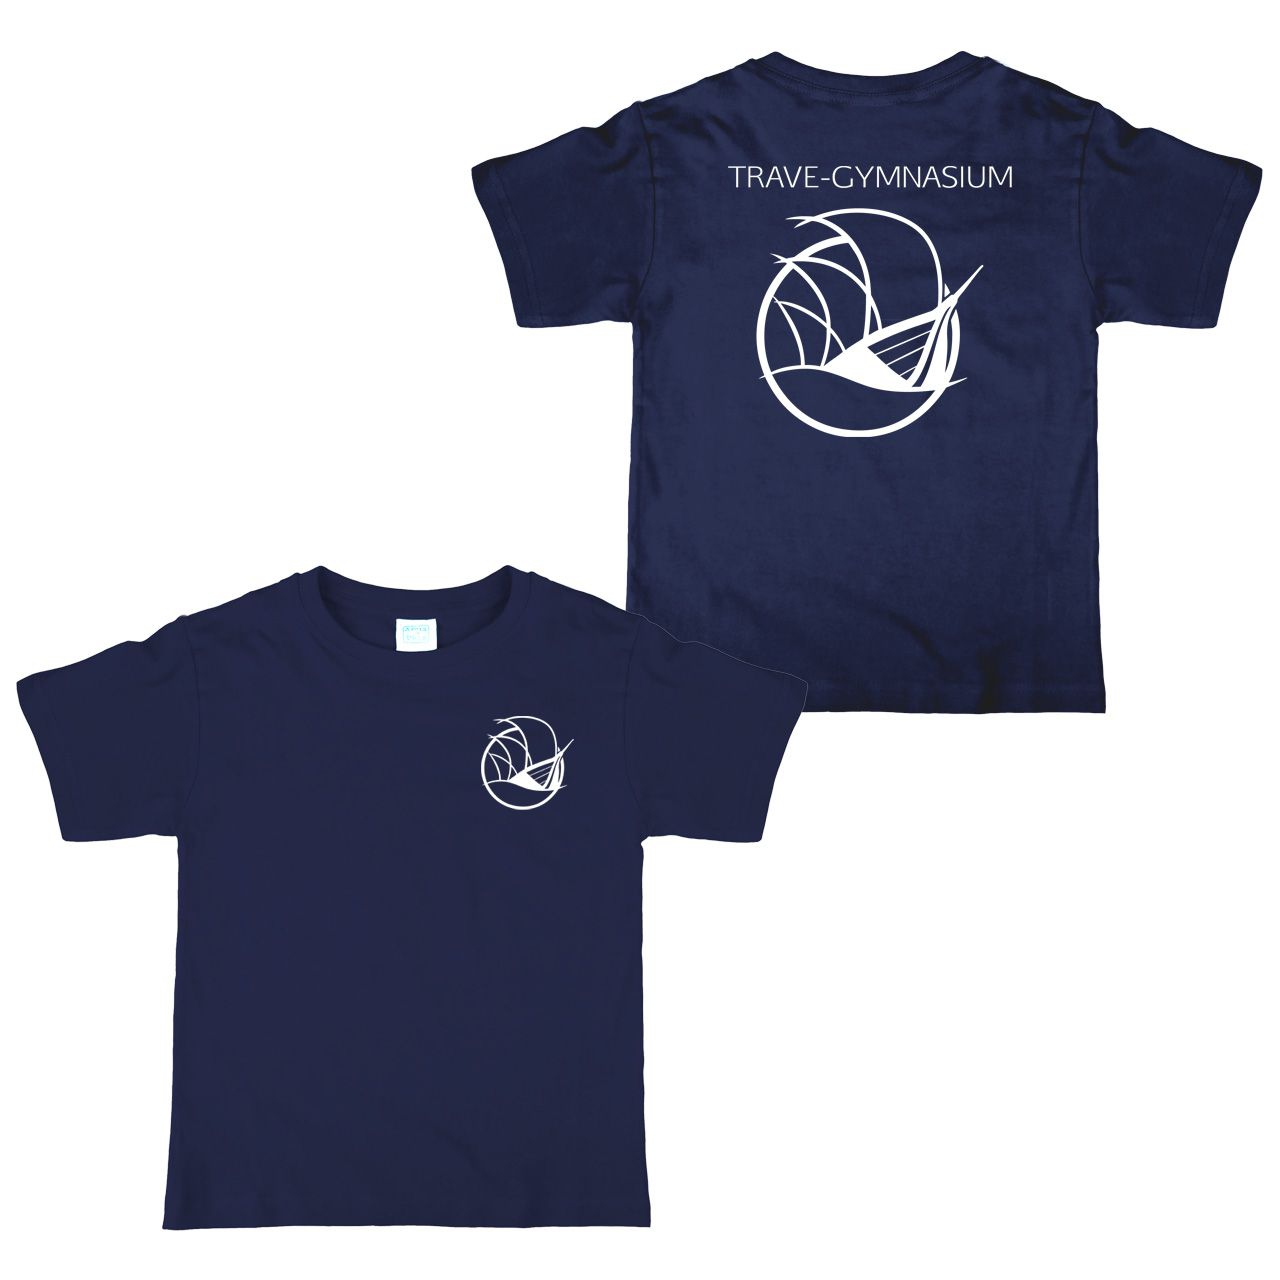 Trave-Gymnasium Kinder T-Shirt navy 146 / 152